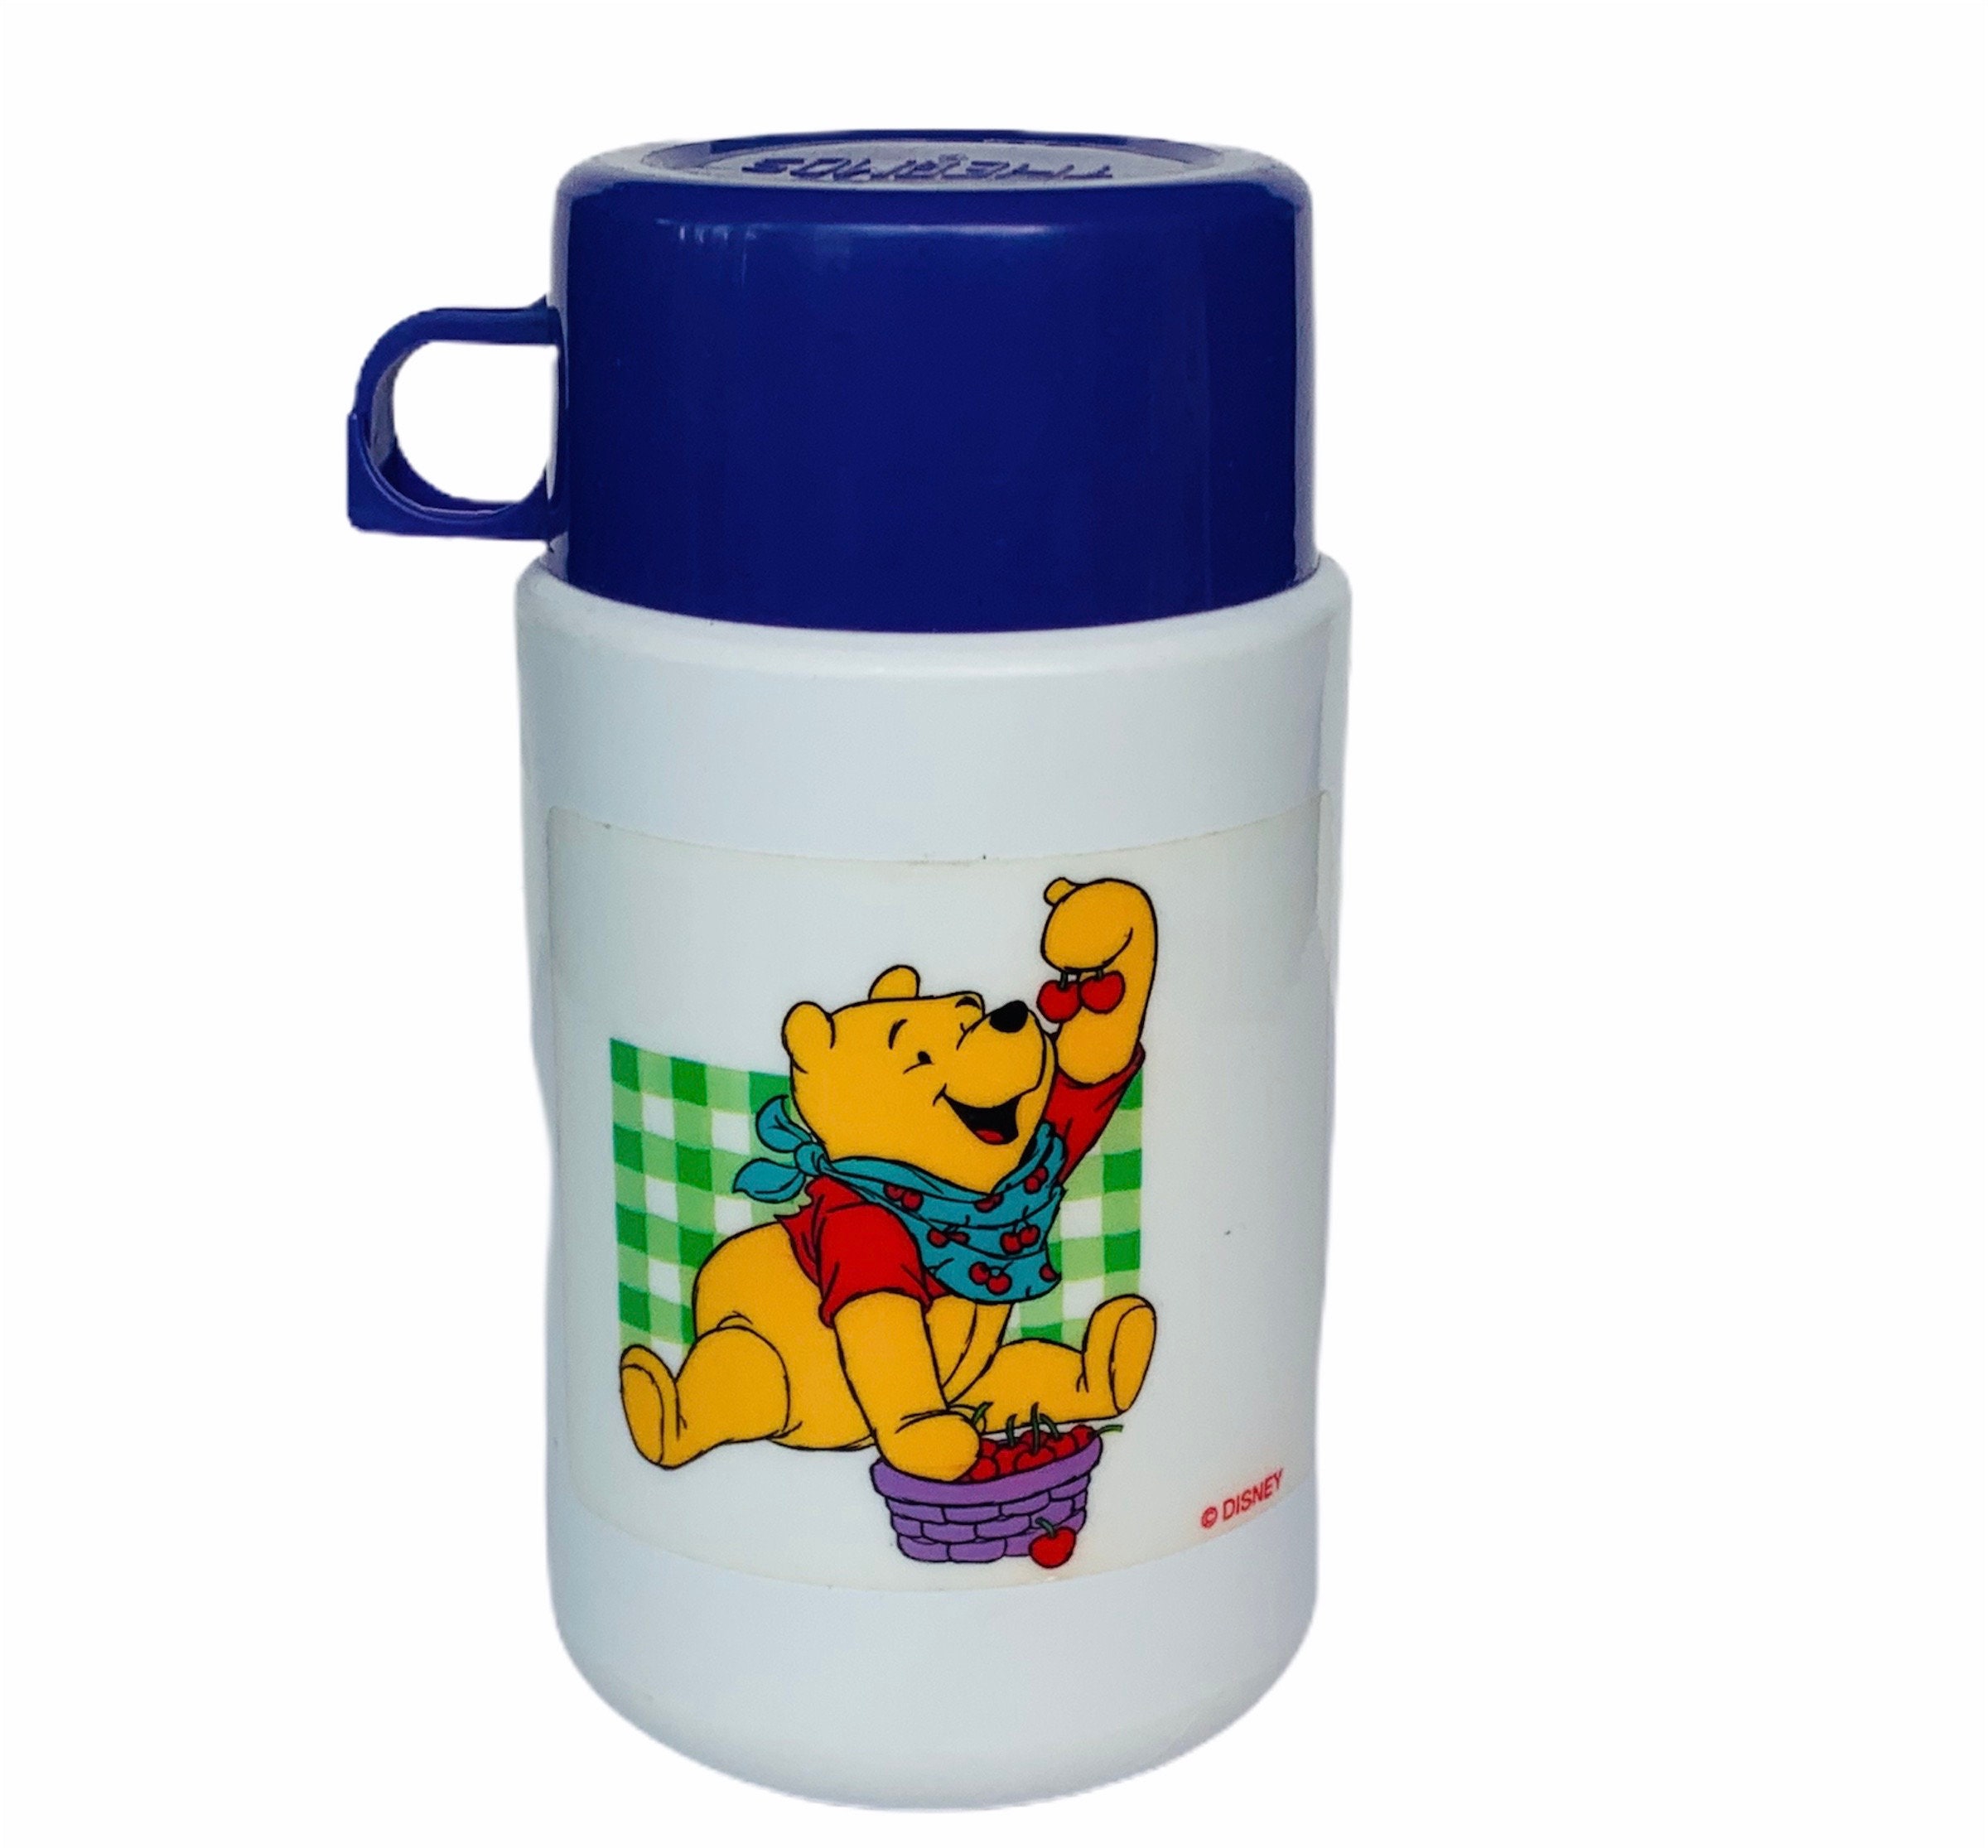 VTG Gift Wrap Holly Hobbie Sesame Street Aladdin Winnie The Pooh